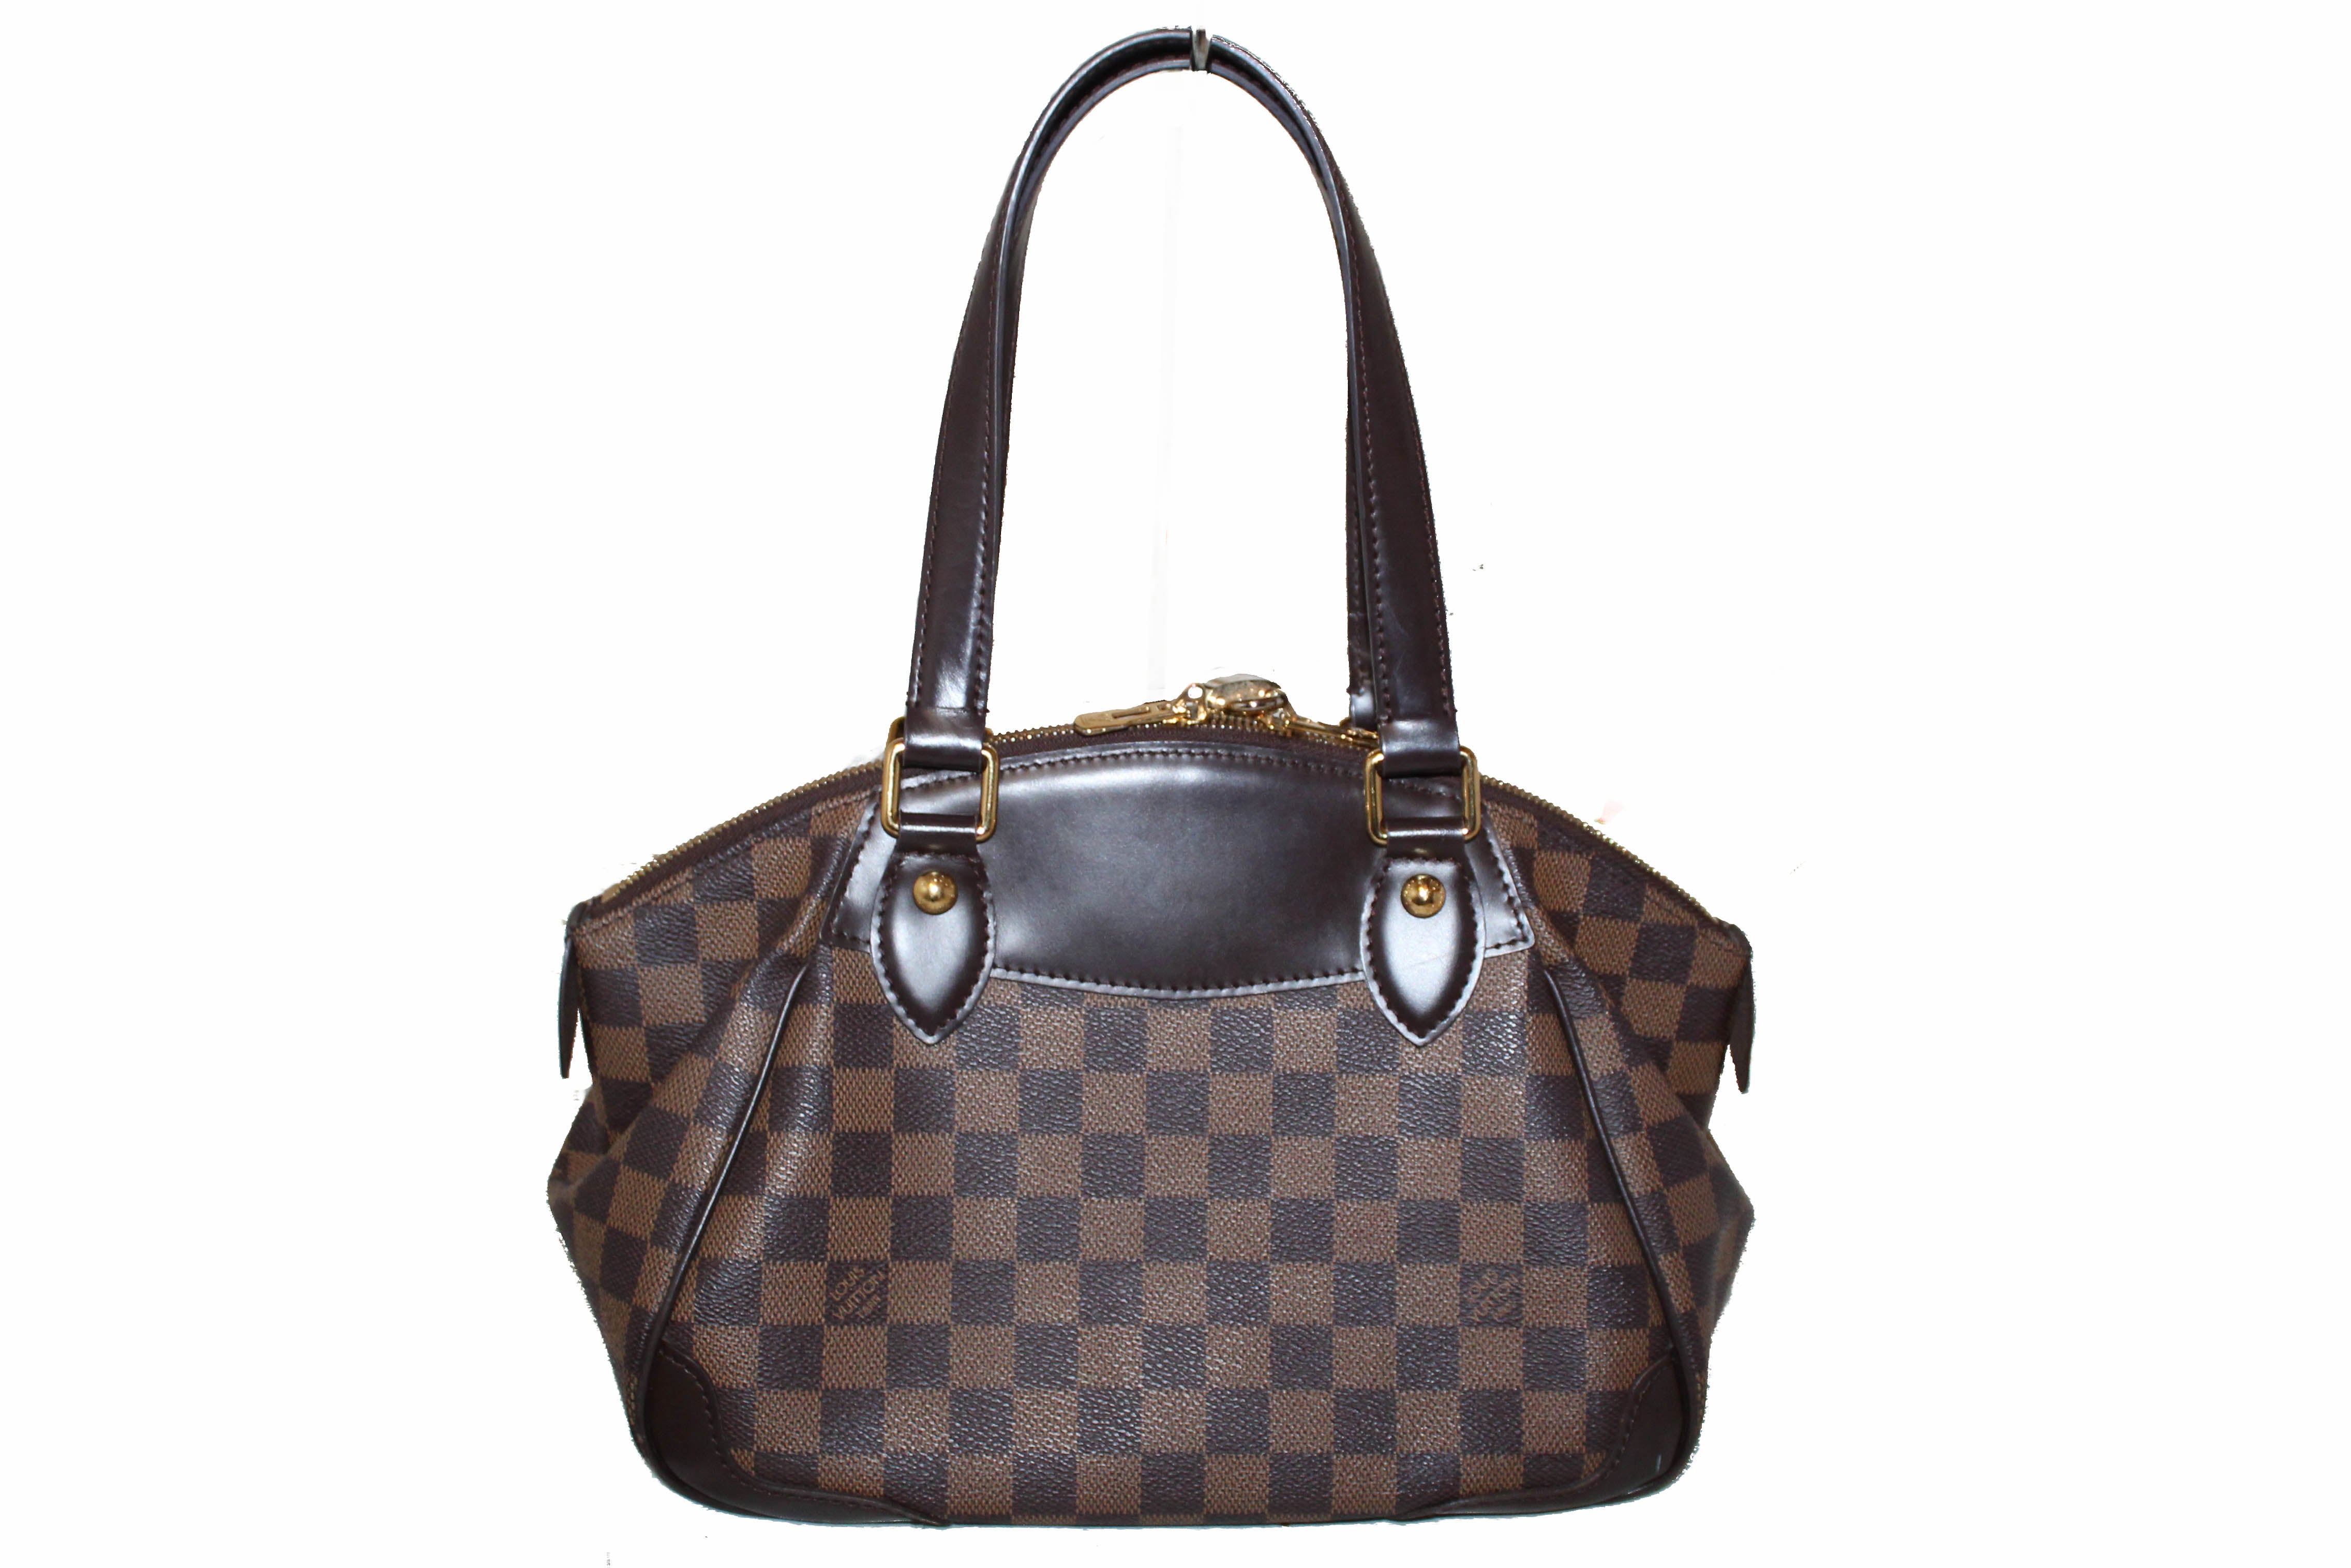 Vintage Louis Vuitton Highbury Damier Ebene Bag